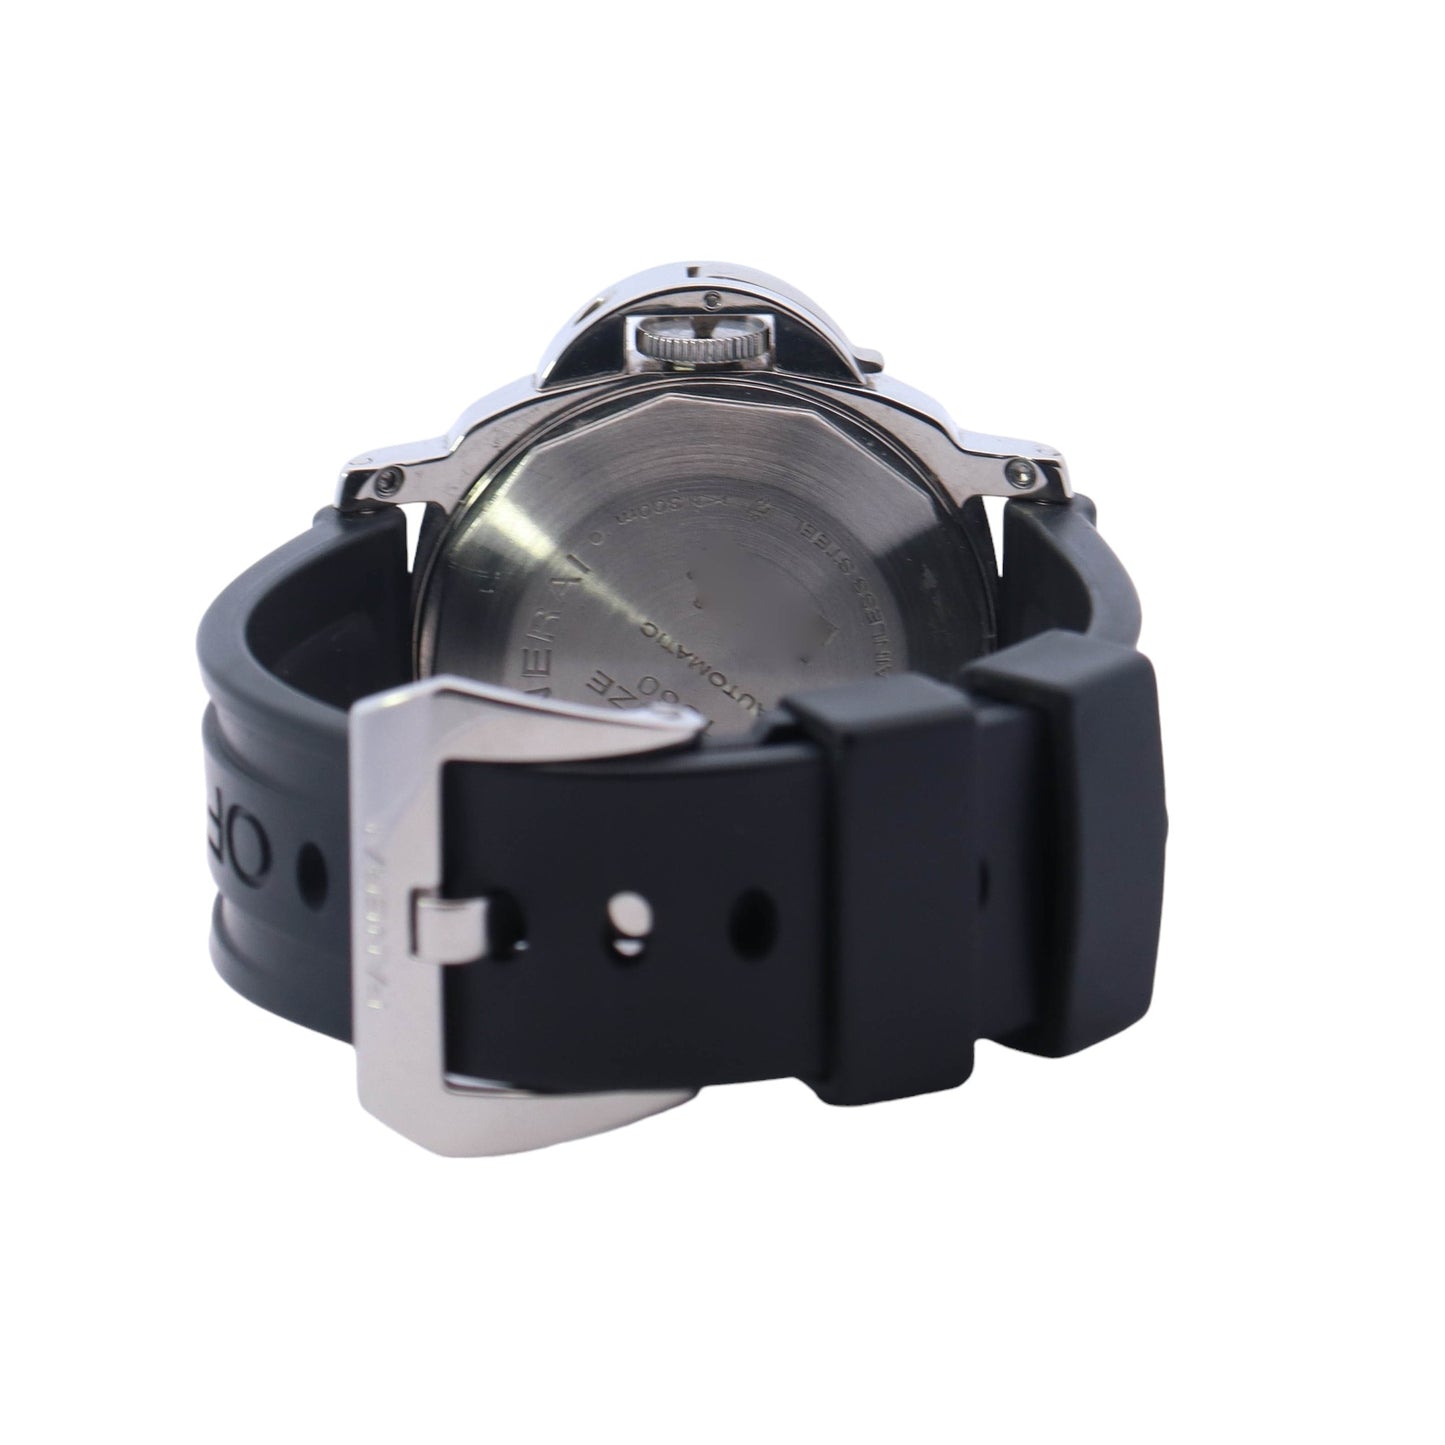 Panerai Luminor Marina Automatic Stainless Steel 44mm Black Stick & Arabic Dial Watch Reference #: PAM00104